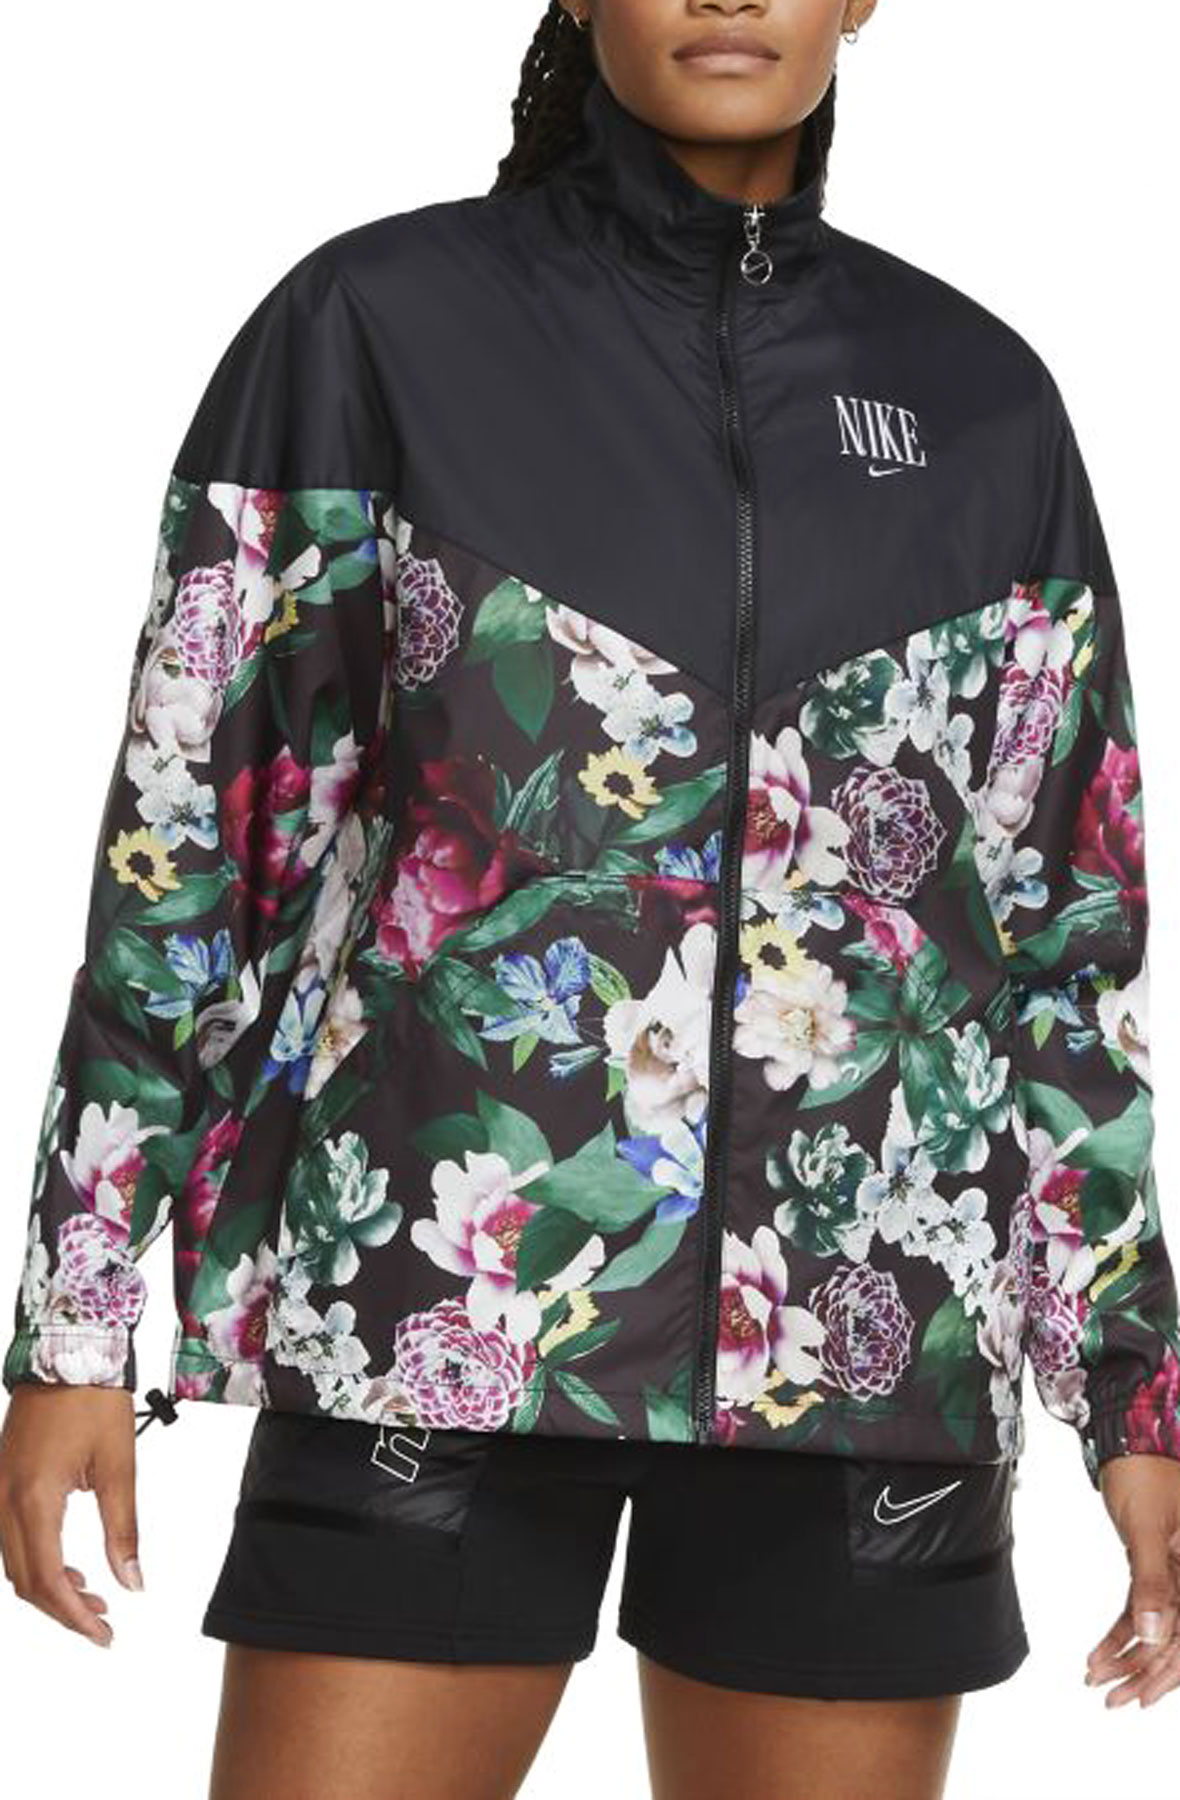 NIKE Sportswear Floral Print Jacket CU6526 010 - Shiekh